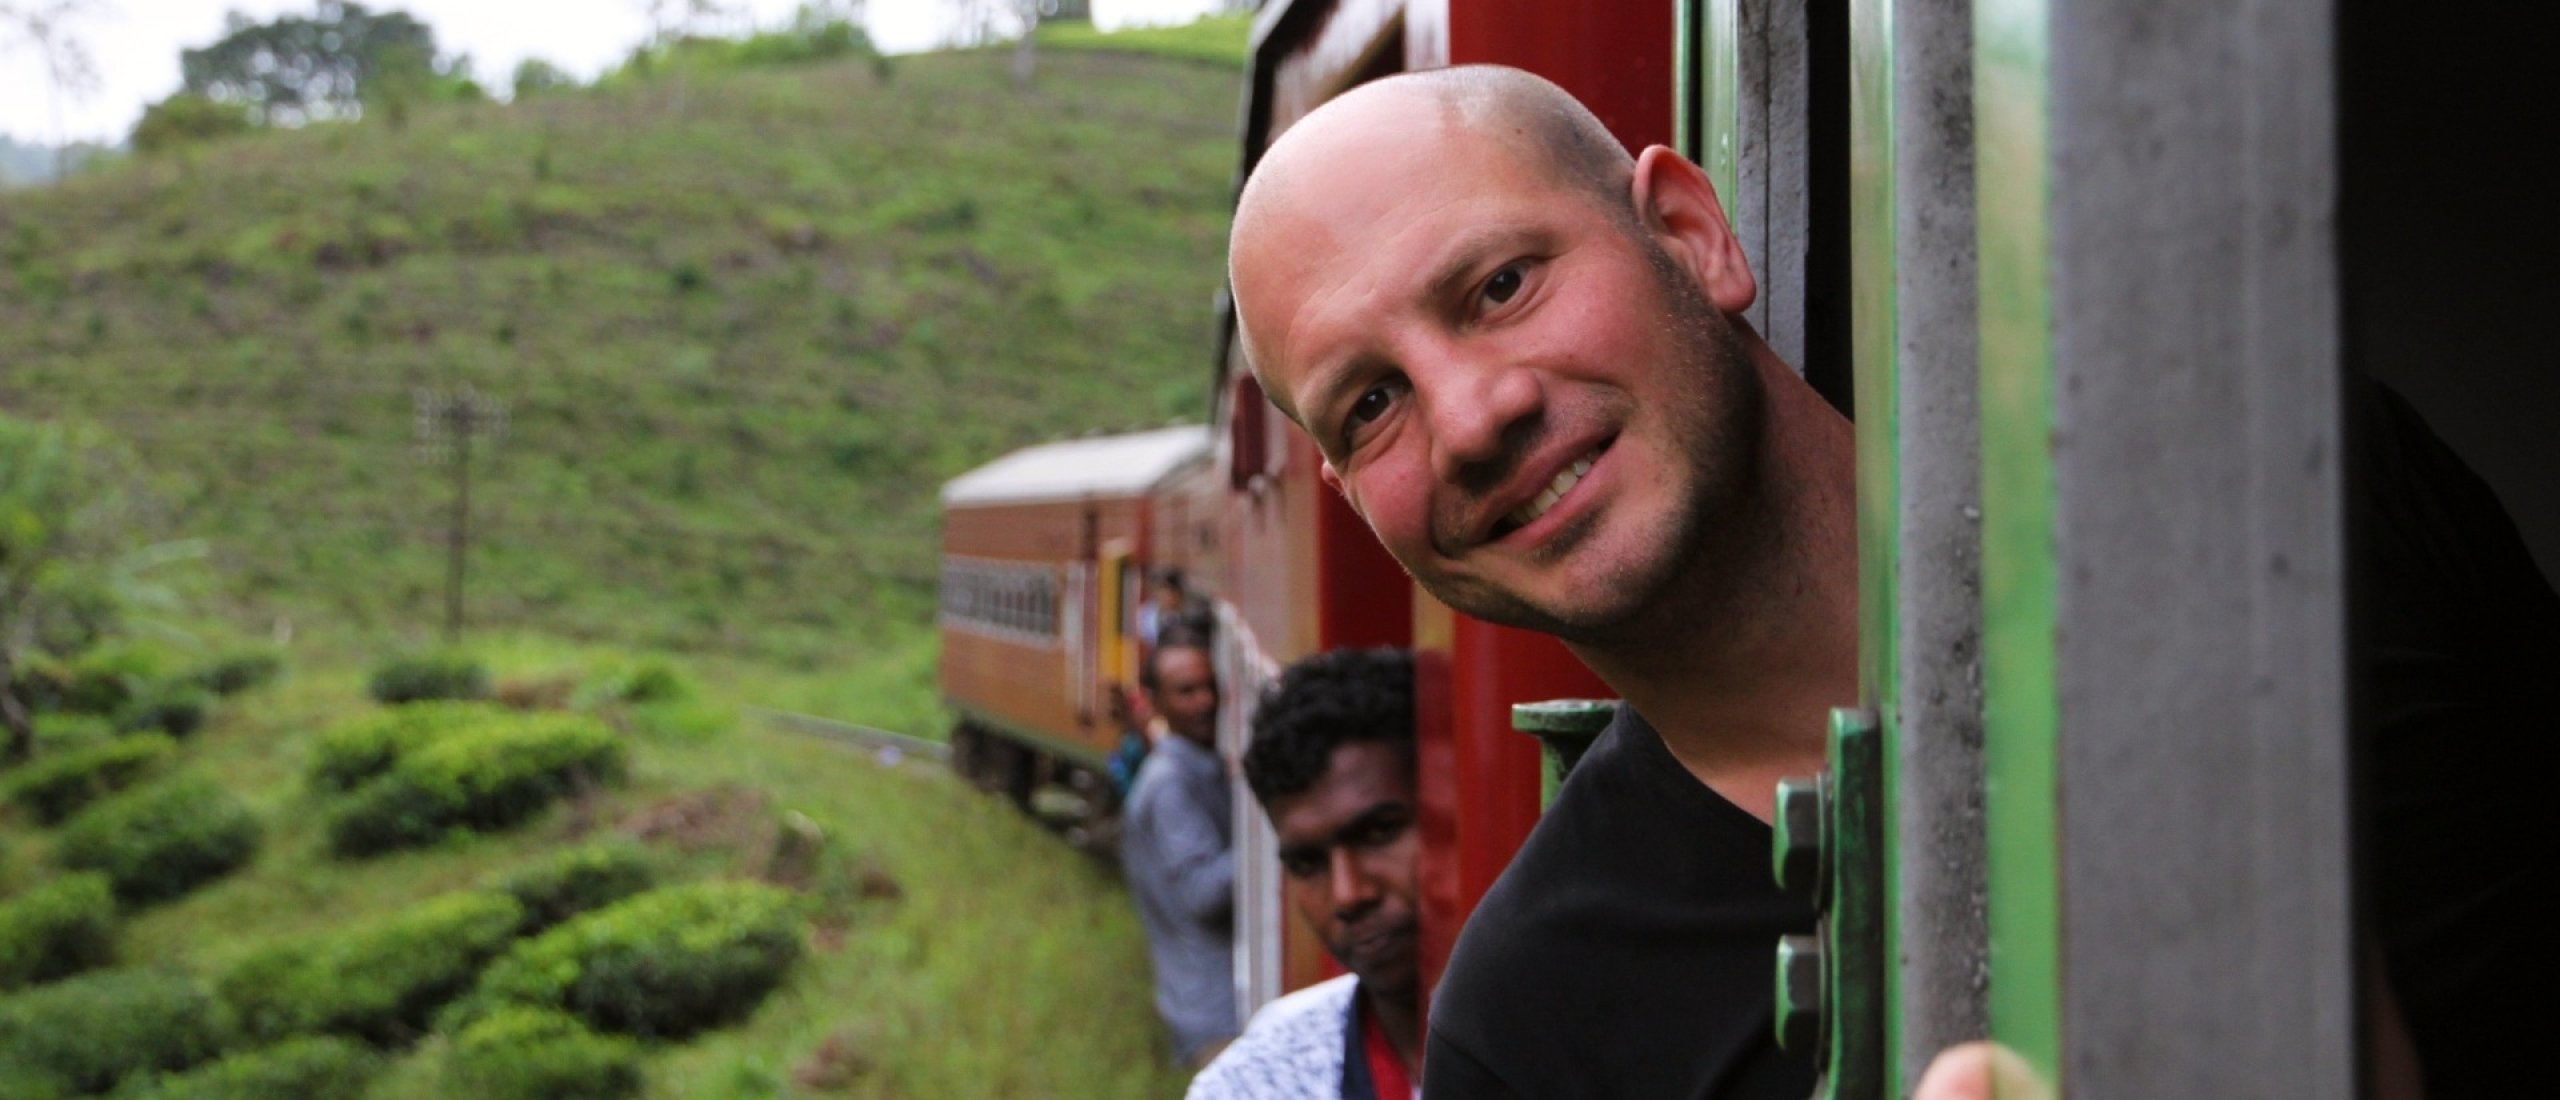 Treinen in Sri Lanka, langs theeplantages en dorpen